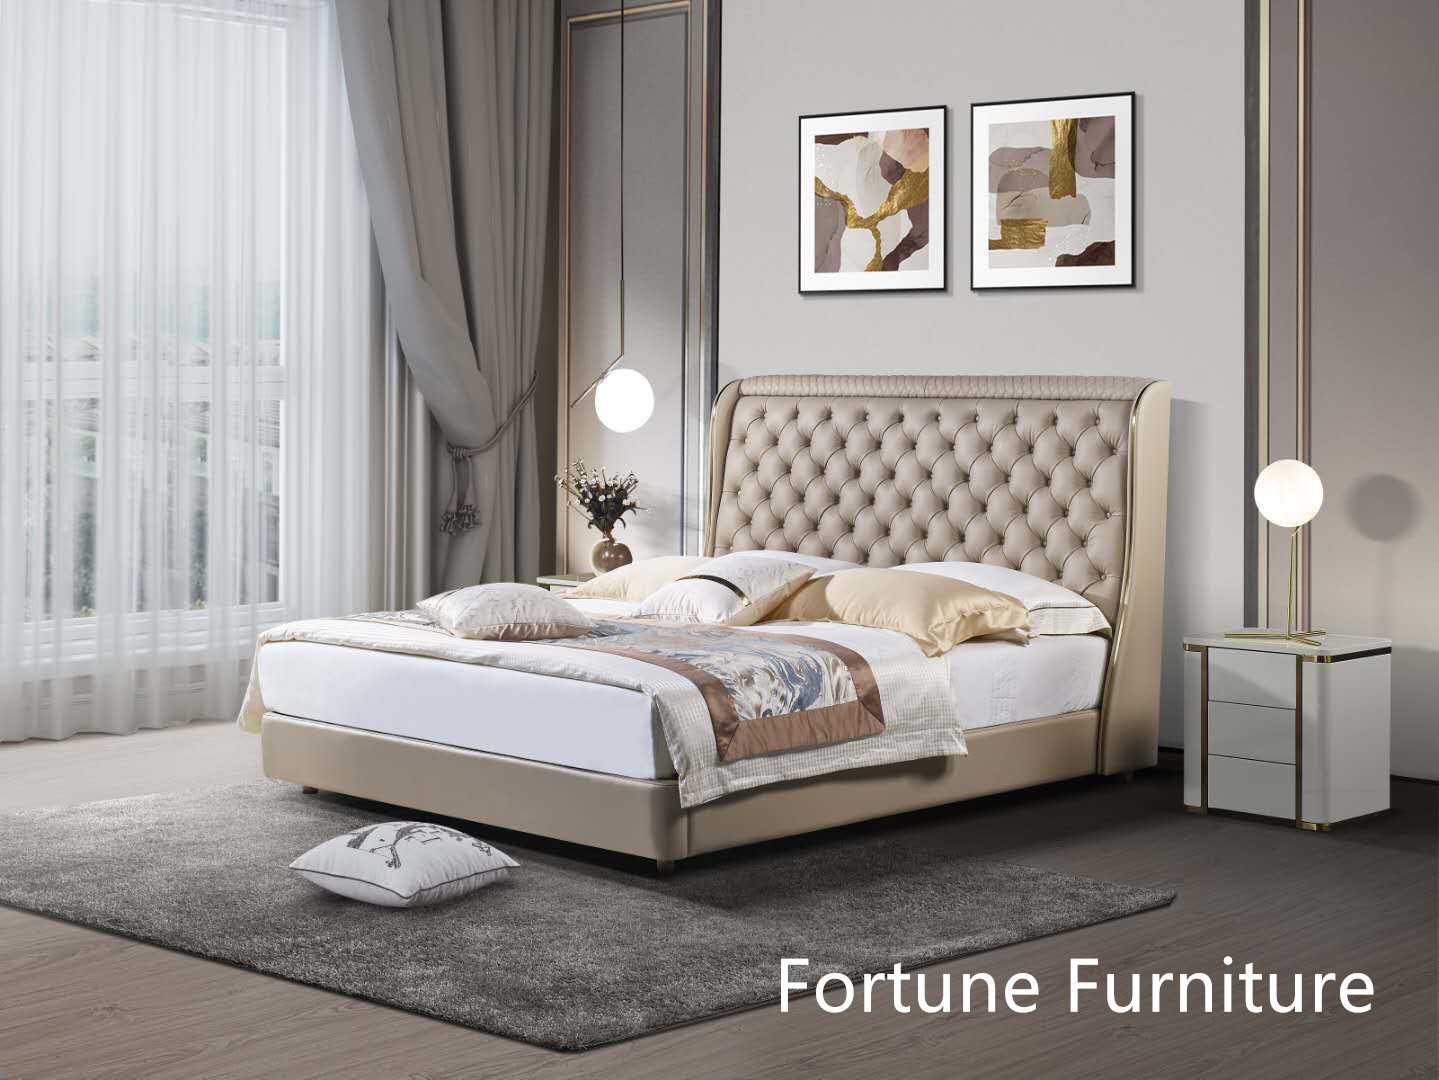 Furniture beds